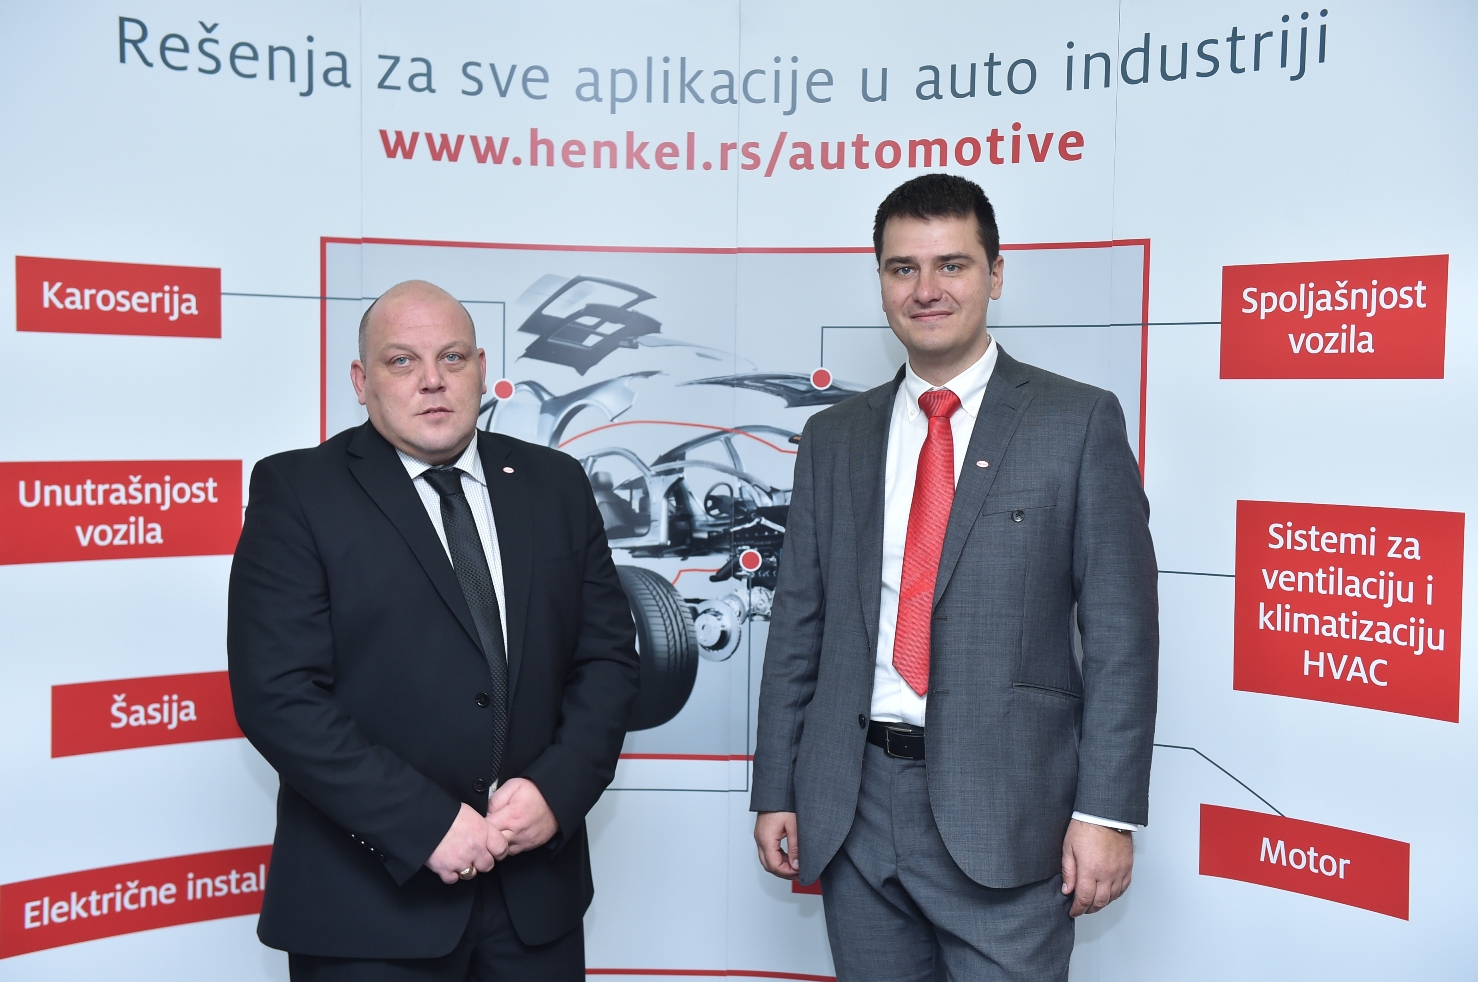 Kompanija Henkel Srbija predstavila portal namenjen auto industriji